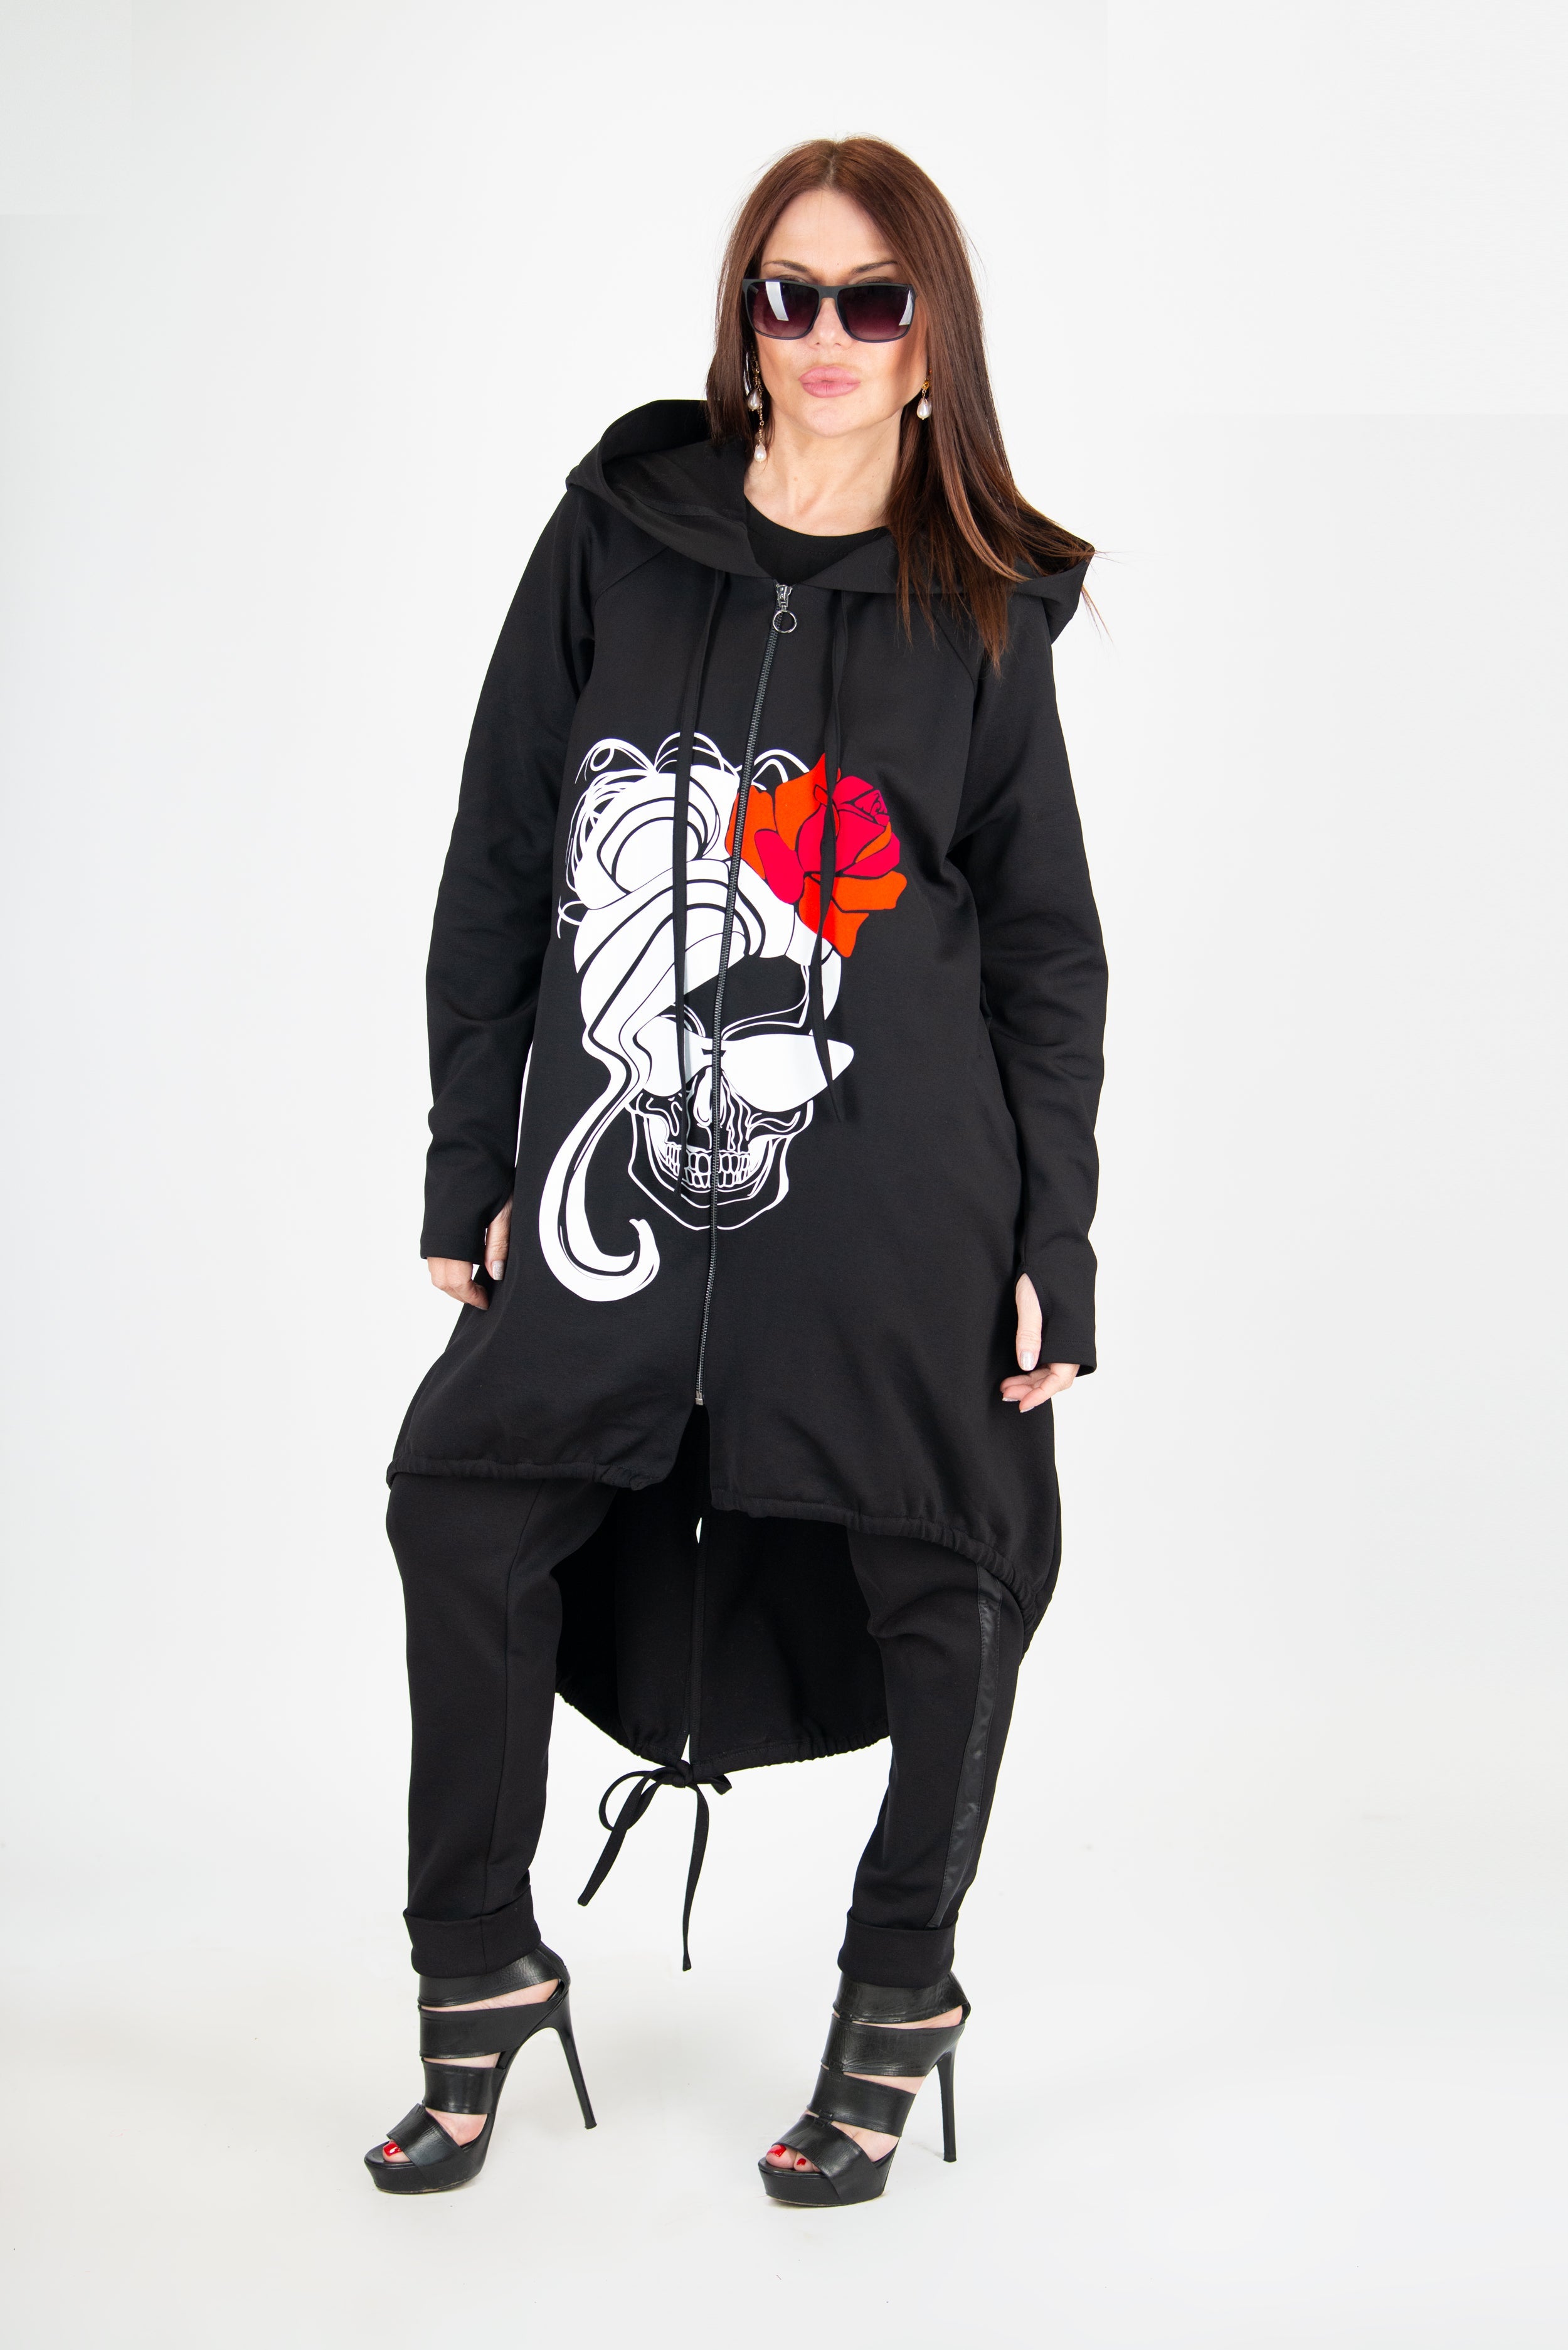 Black Hooded Zipper Sport Jacket with Print by EUG Fashion